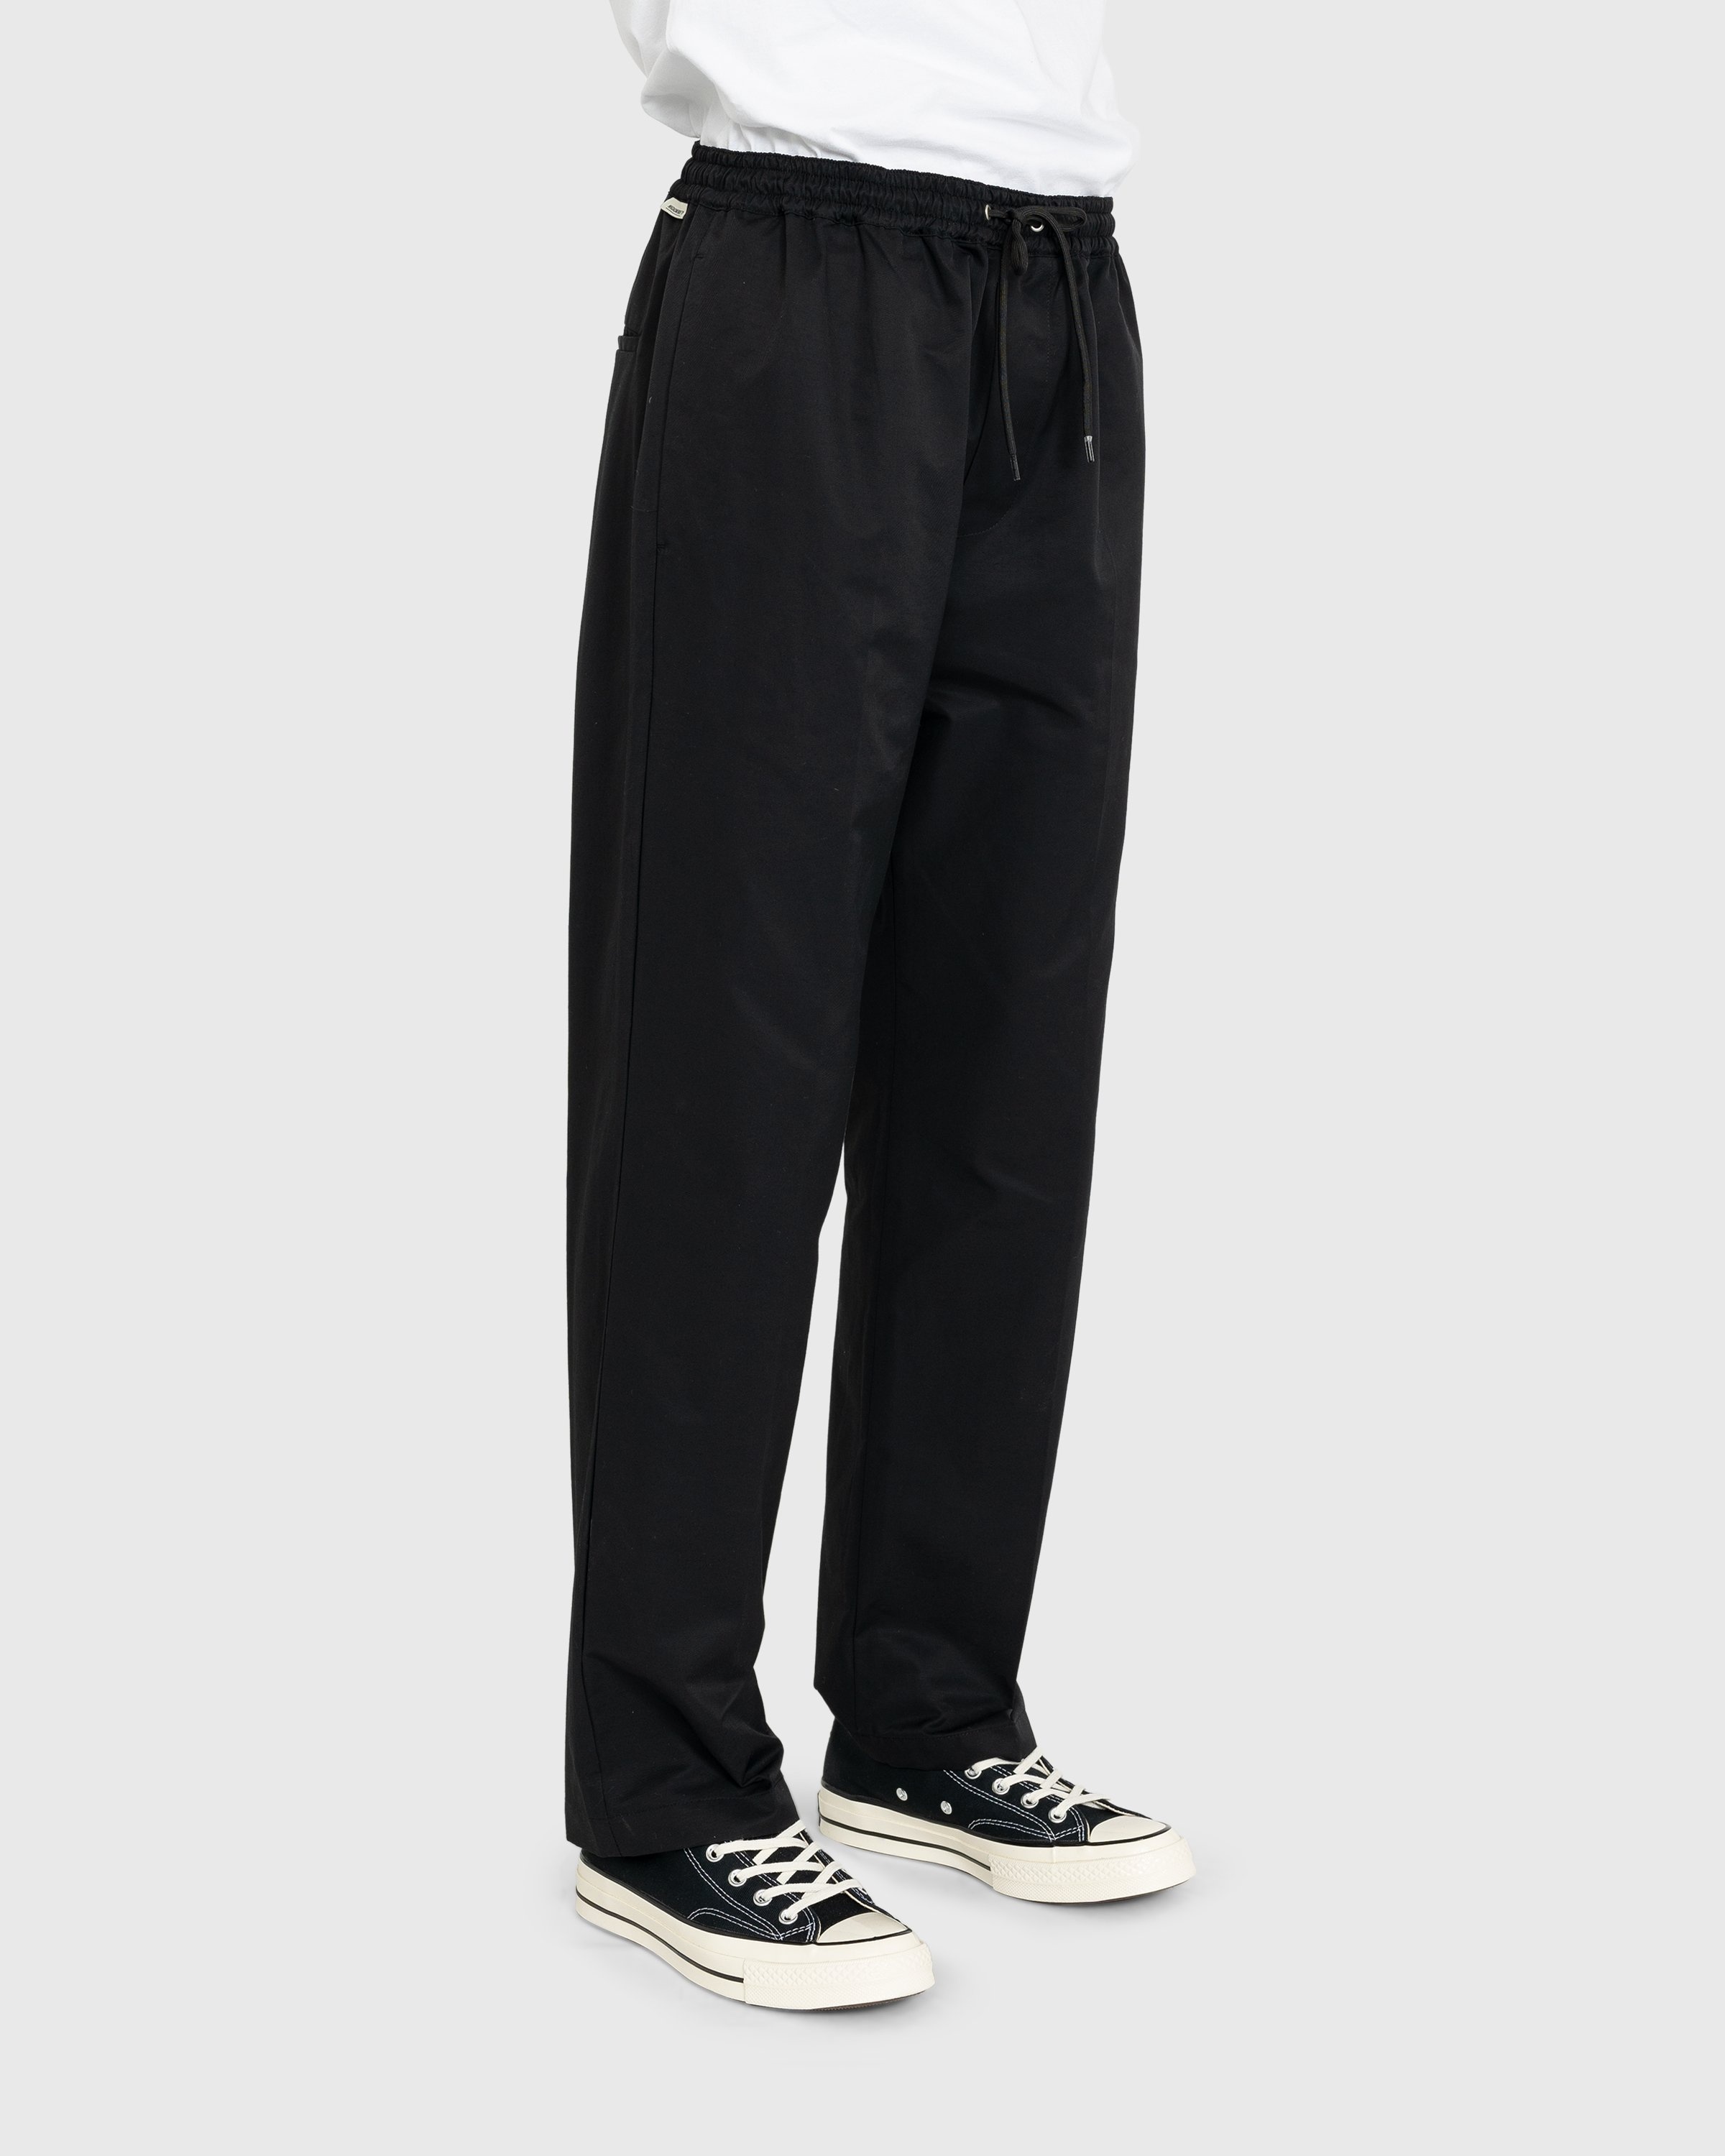 Highsnobiety – Cotton Nylon Elastic Pants Black - Pants - Black - Image 4